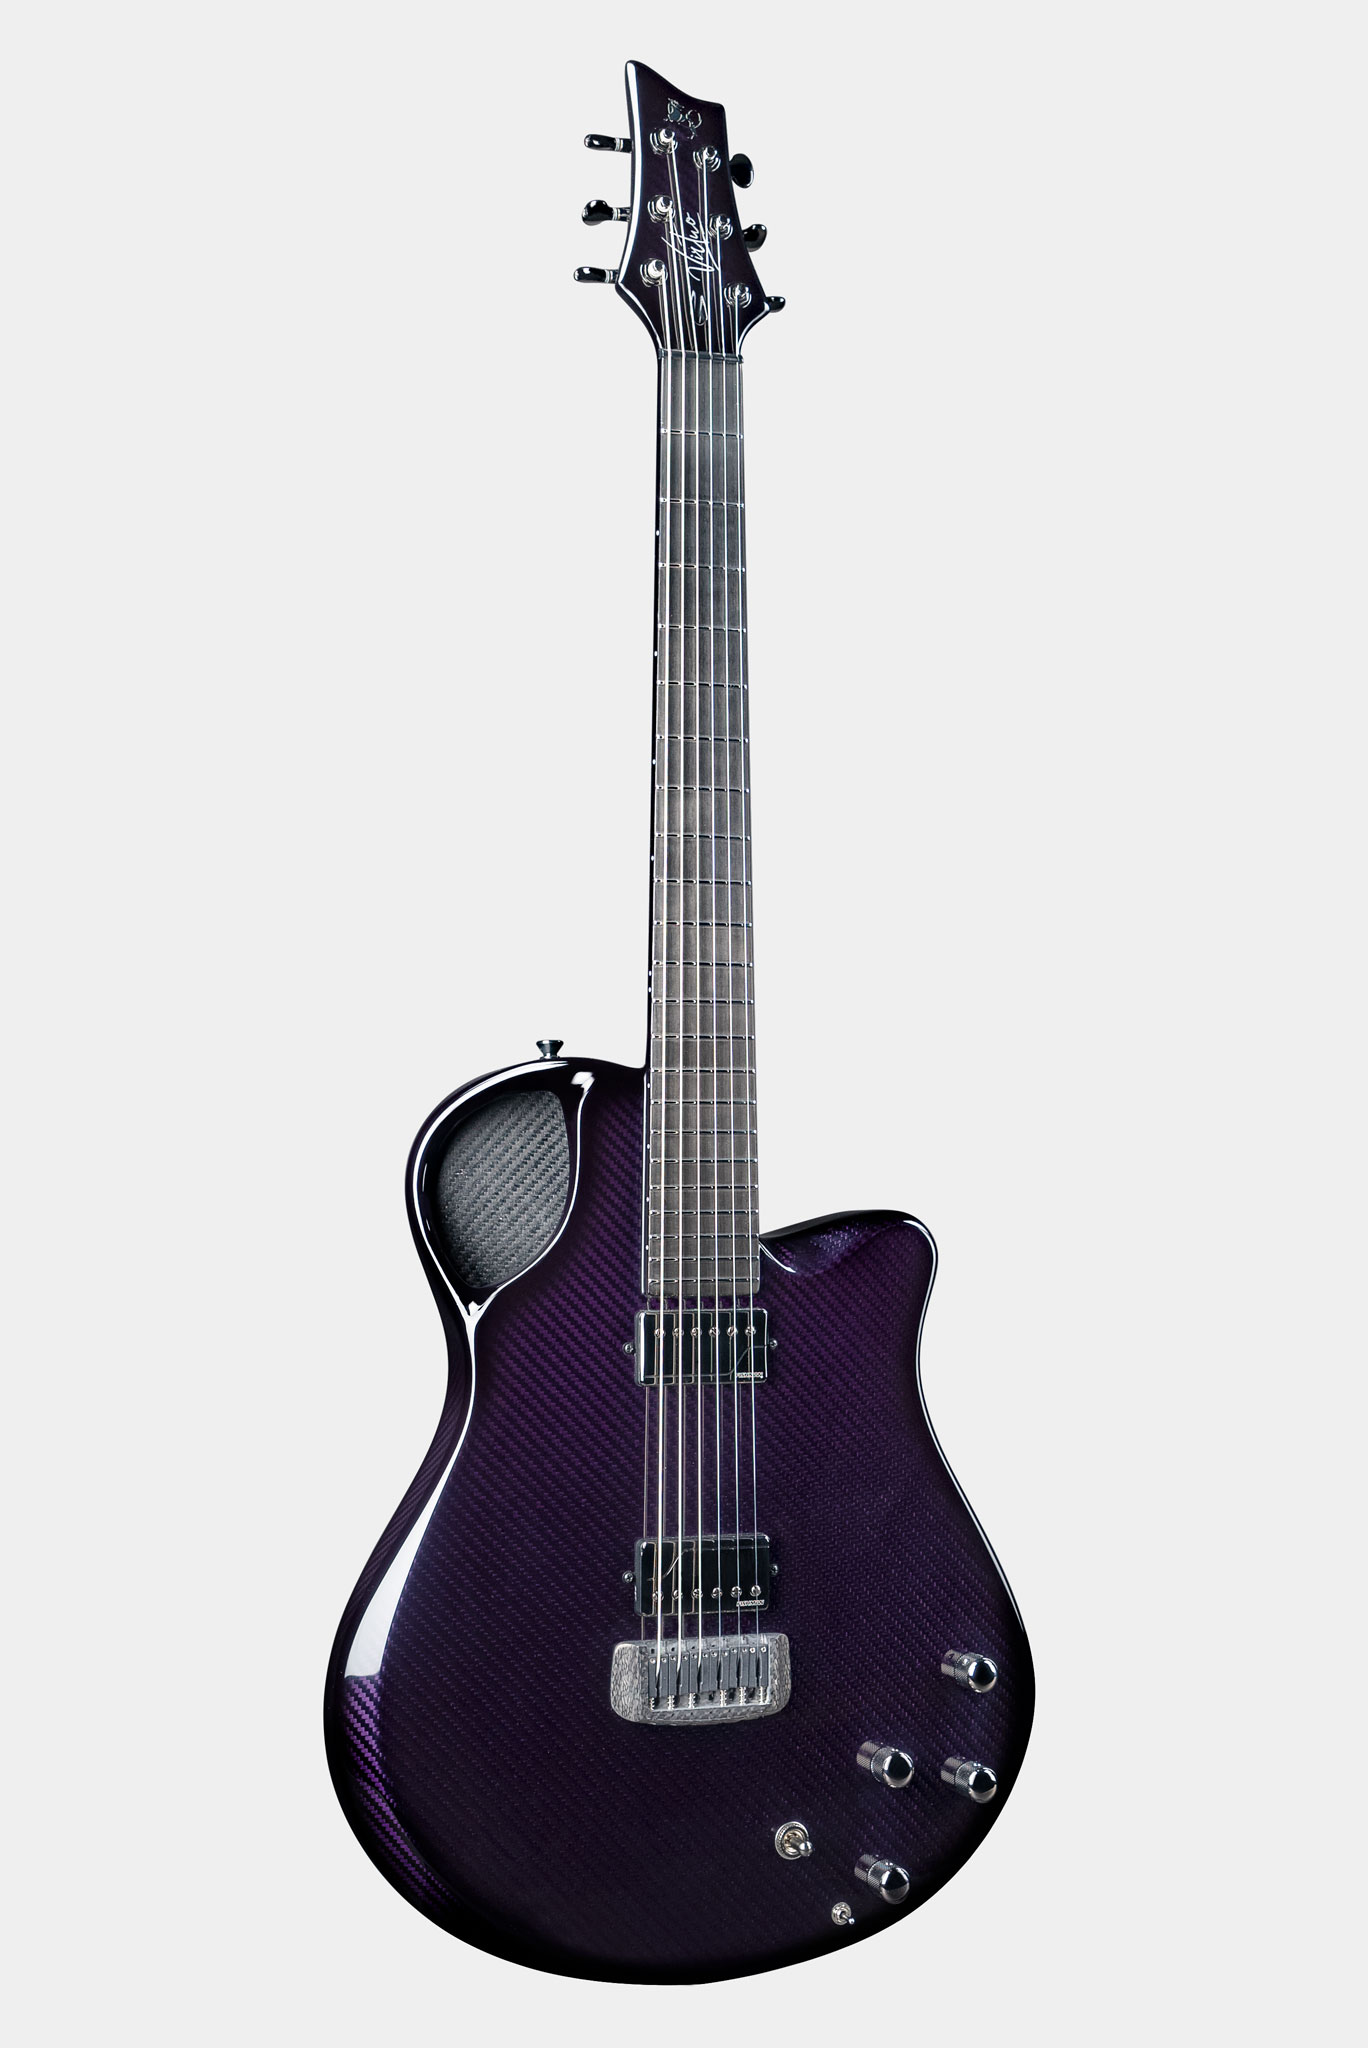 Emerald Virtuo Carbon Fiber Guitar in Purple